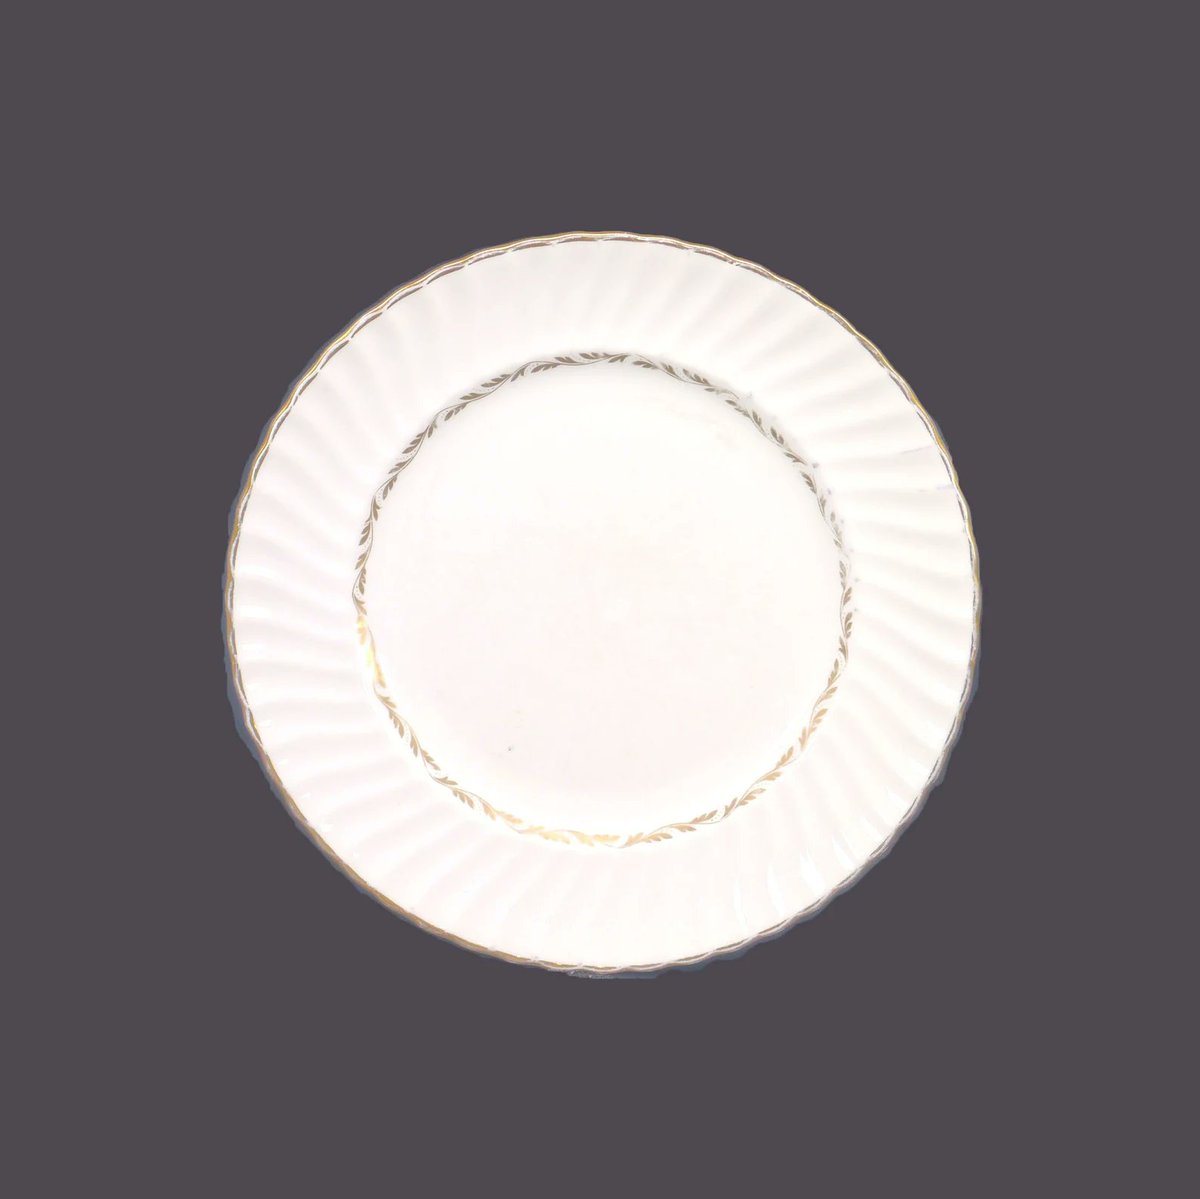 Royal Adderley Orleans H1416 bone china dinner plate made in England. etsy.me/4bz6hen via @Etsy #BuyfromGroovy #antiqueshop #tabledecor #tableware #dinnerware #RoyalAdderley #AdderleyBoneChina #AdderleyOrleans #goldwhitedishes #EtsySellers